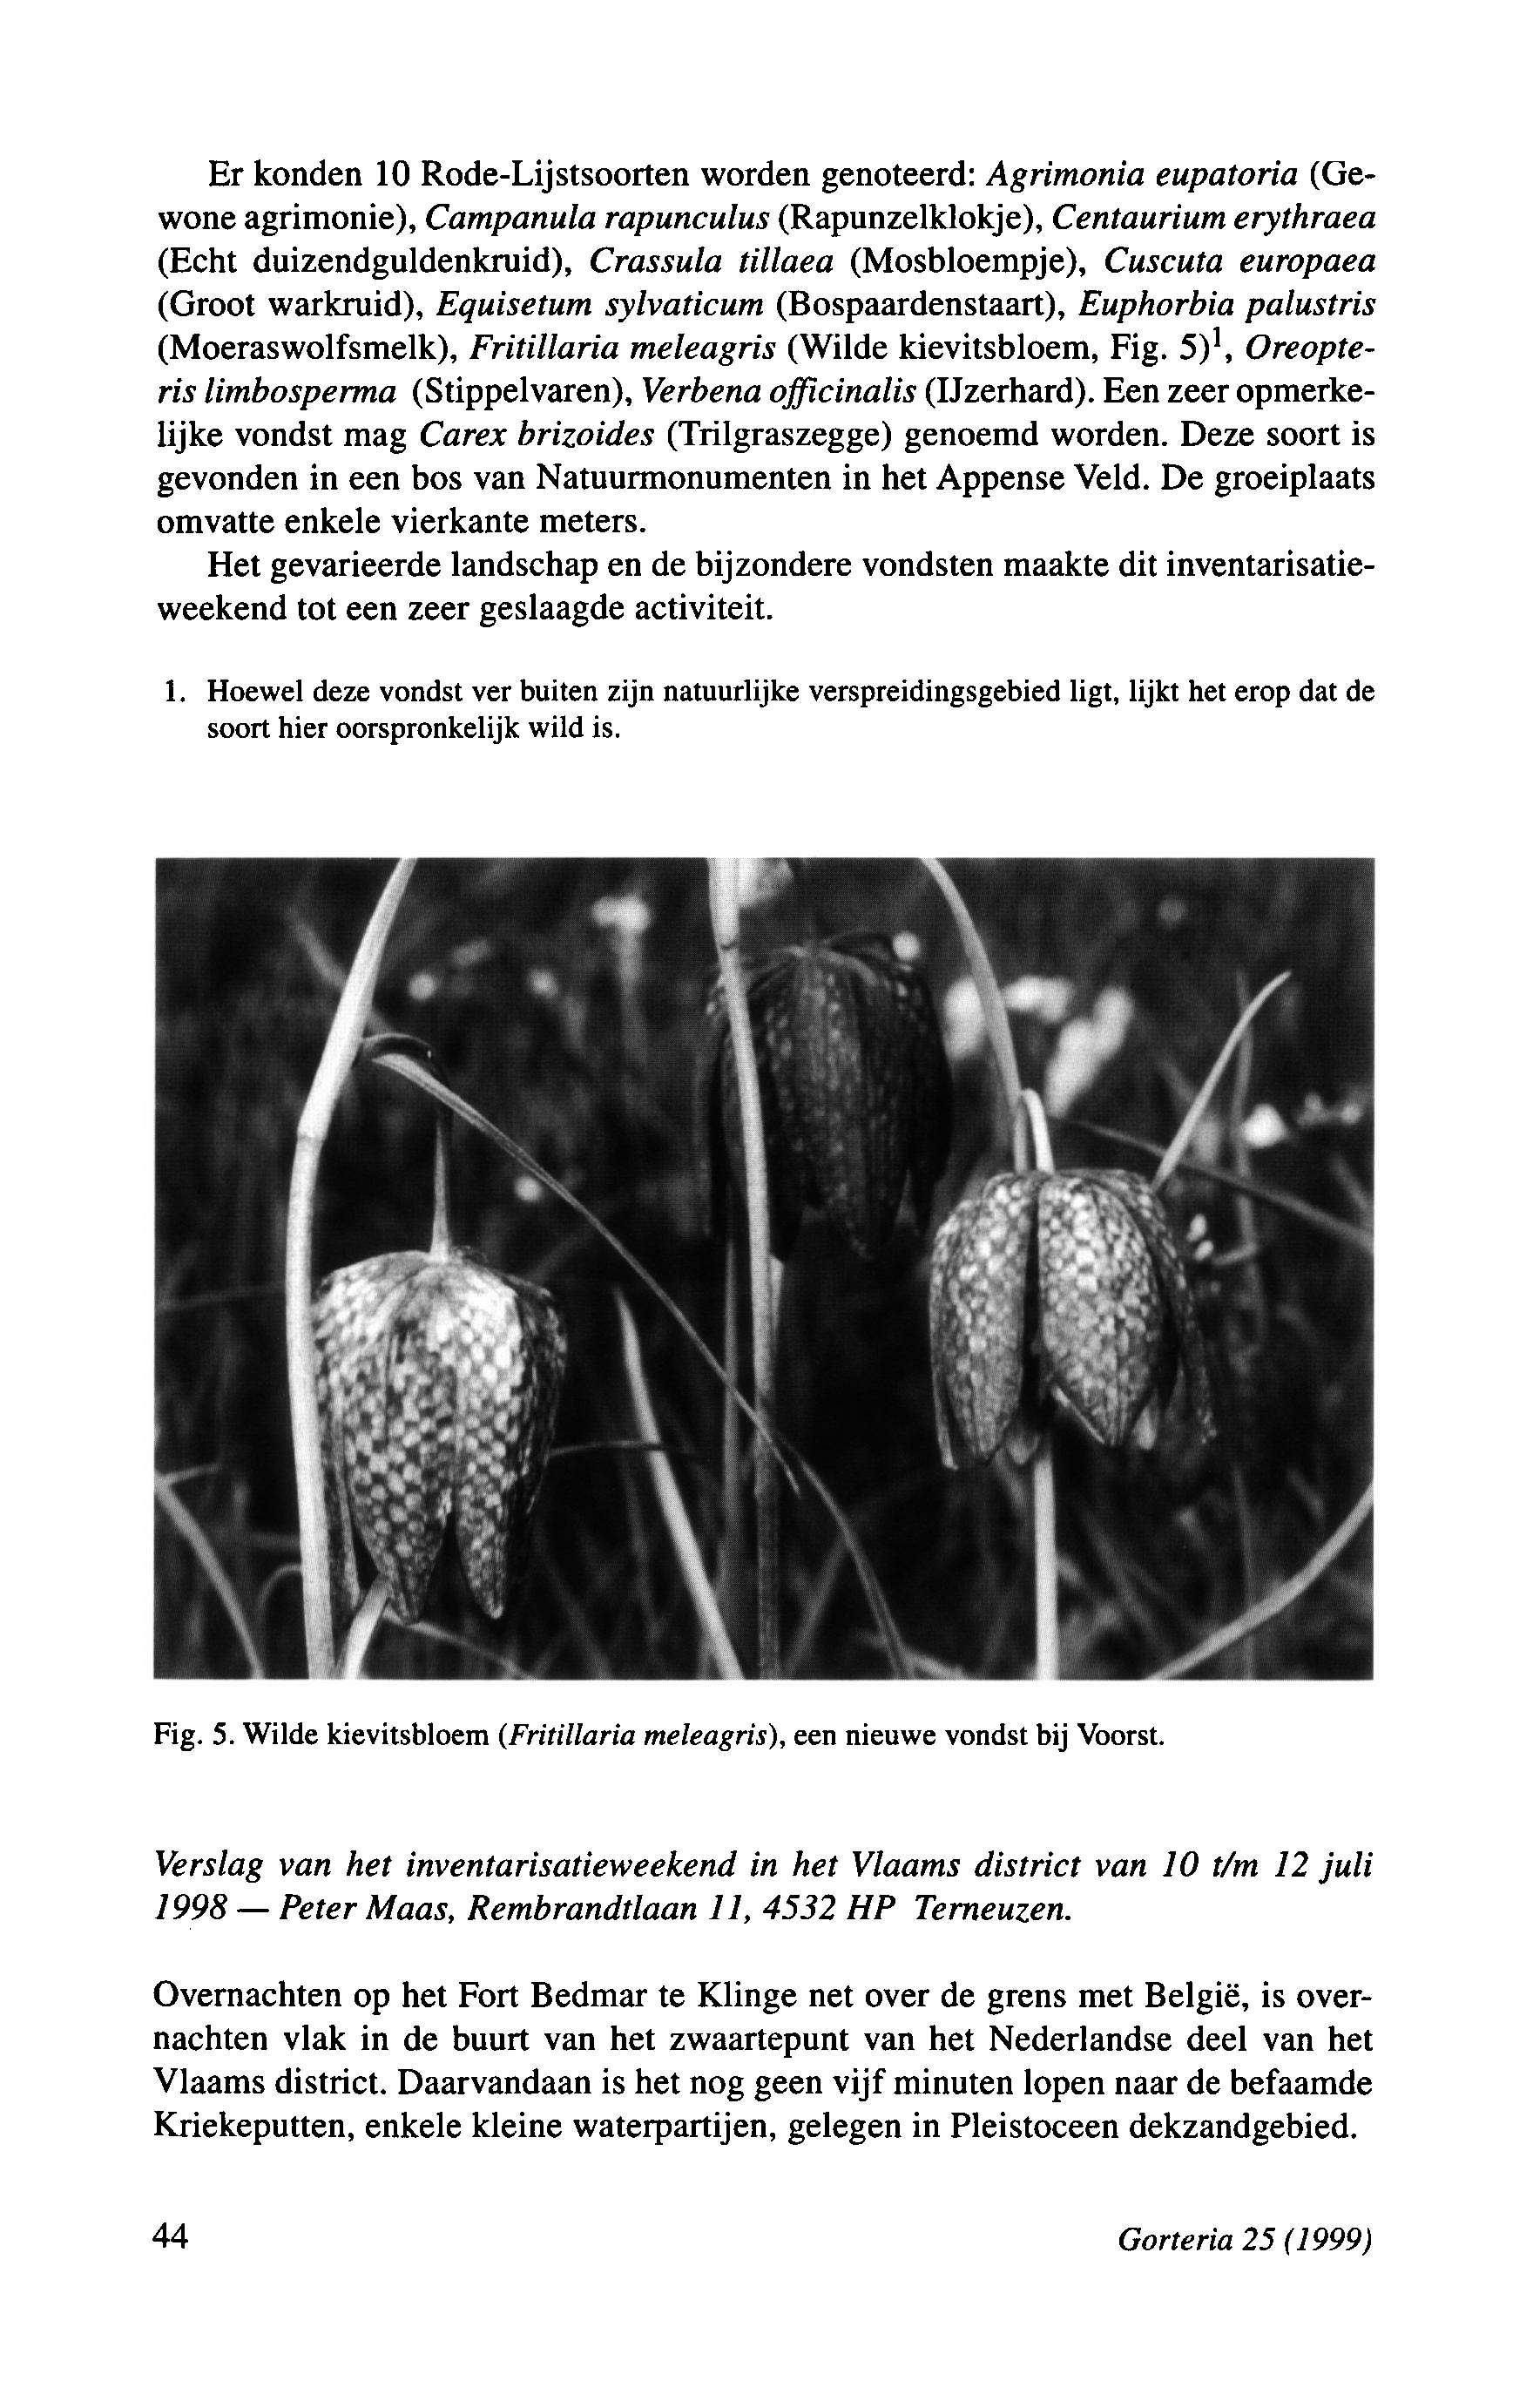 Peter Er konden 10 Rode-Lijstsoorten worden genoteerd: Agrimonia eupatoria (Gewone agrimonie), Campanula rapunculus (Rapunzelklokje), Centaurium erythraea (Echt duizendguldenkruid), Crassula tillaea